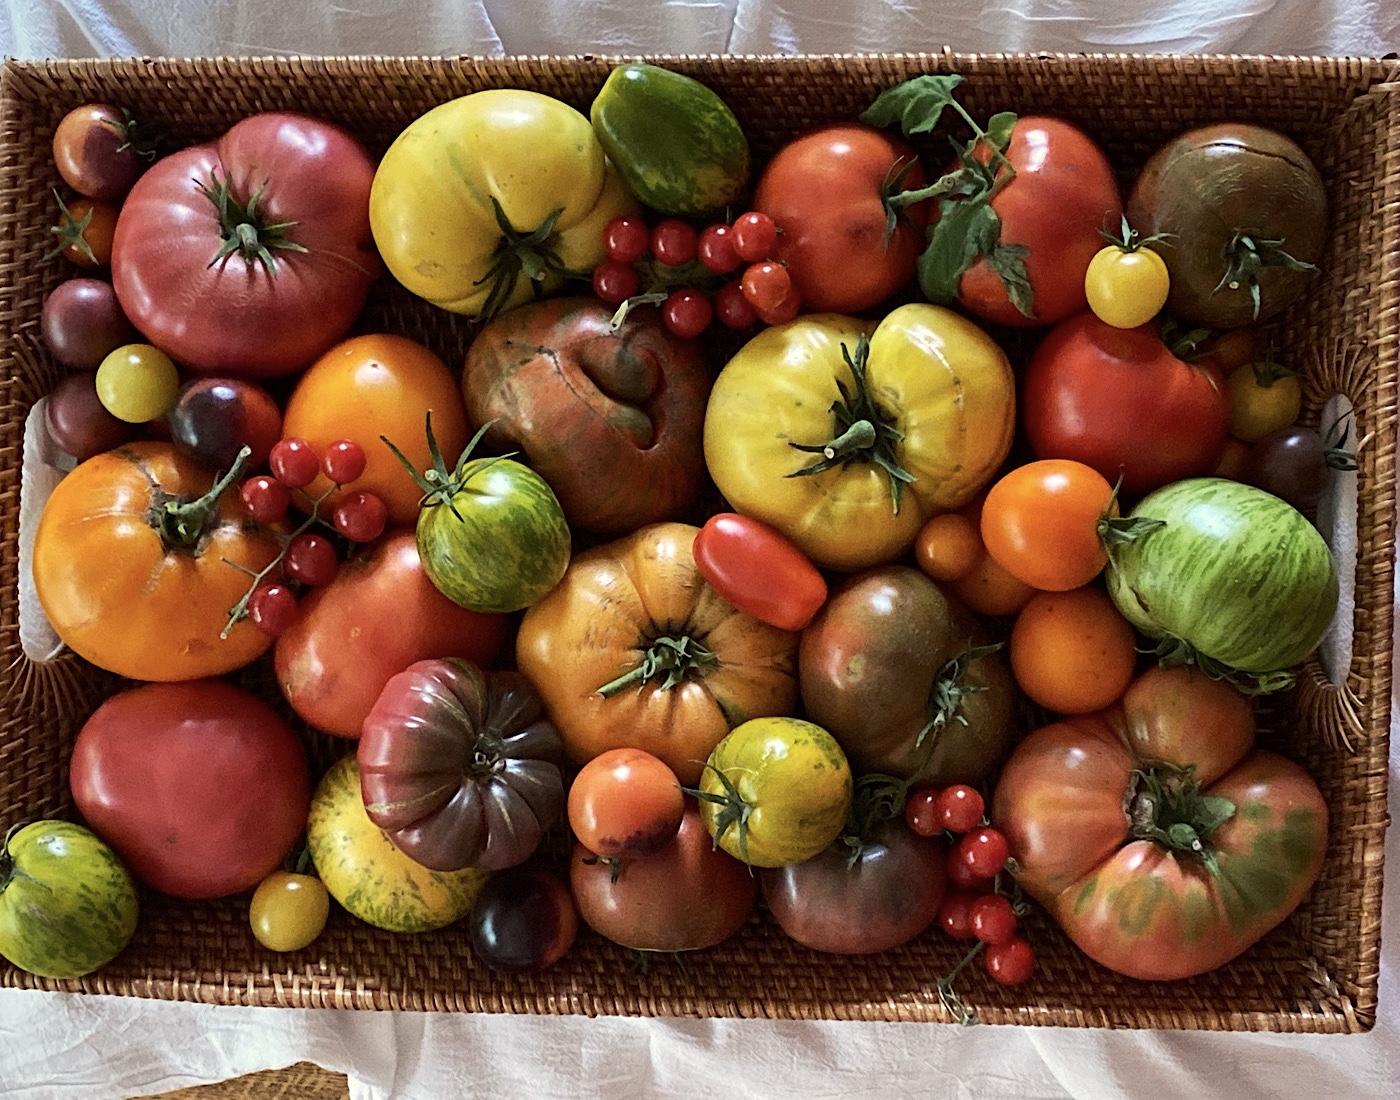 Taste the Difference of Saint Pierre Heirloom Tomatoes - Good Yield, Disease Resistance & Balanced Flavor Profile!